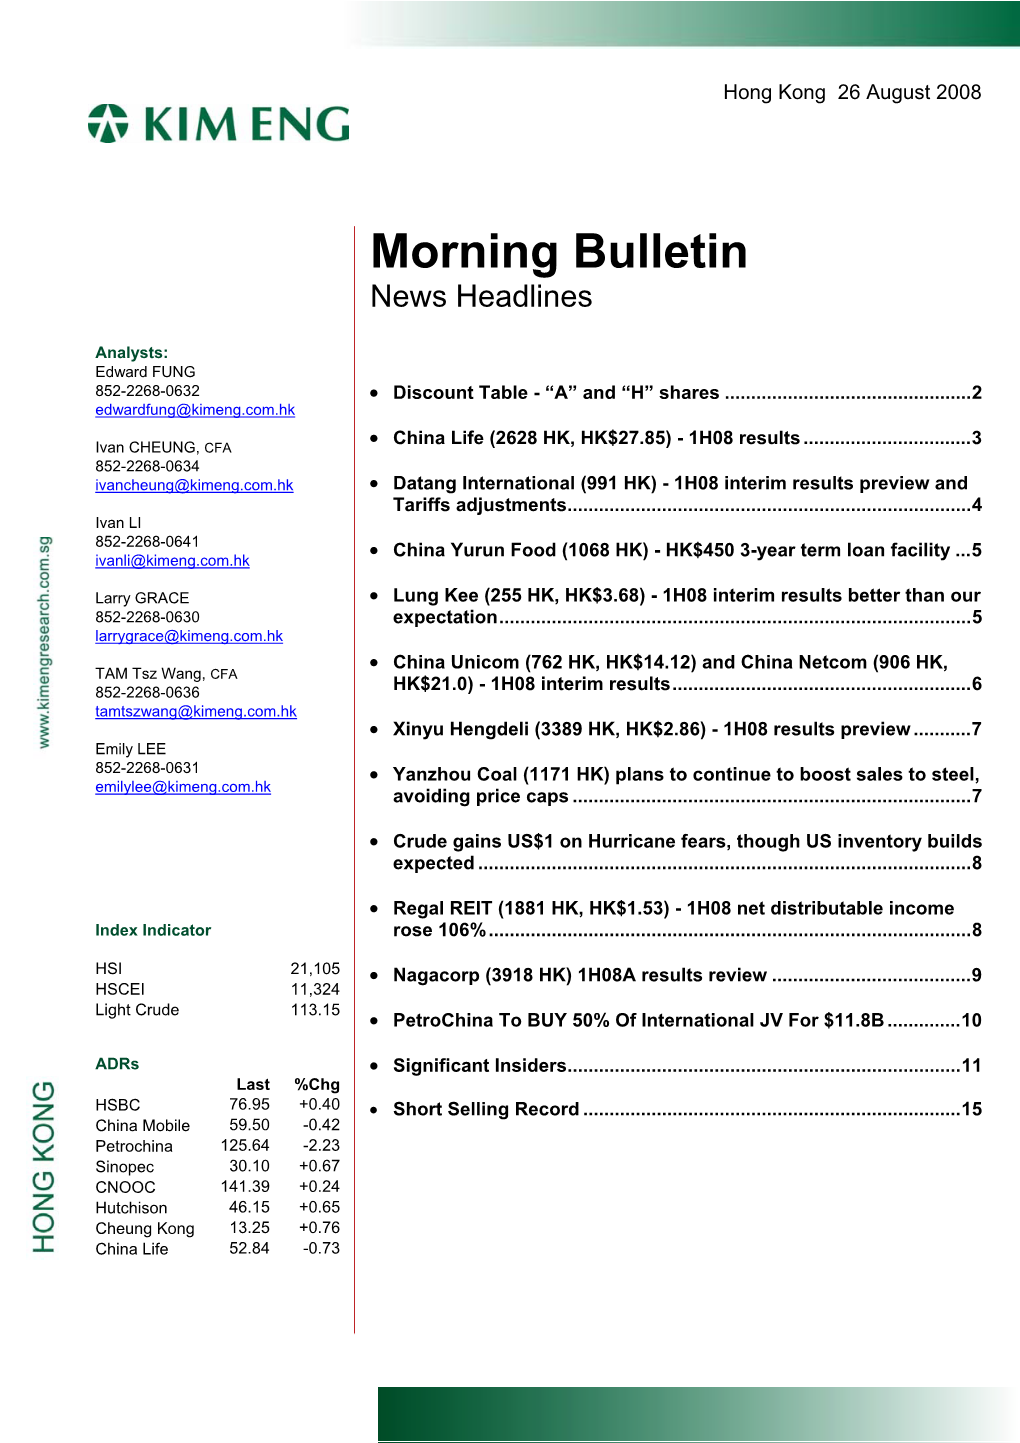 Morning Bulletin News Headlines